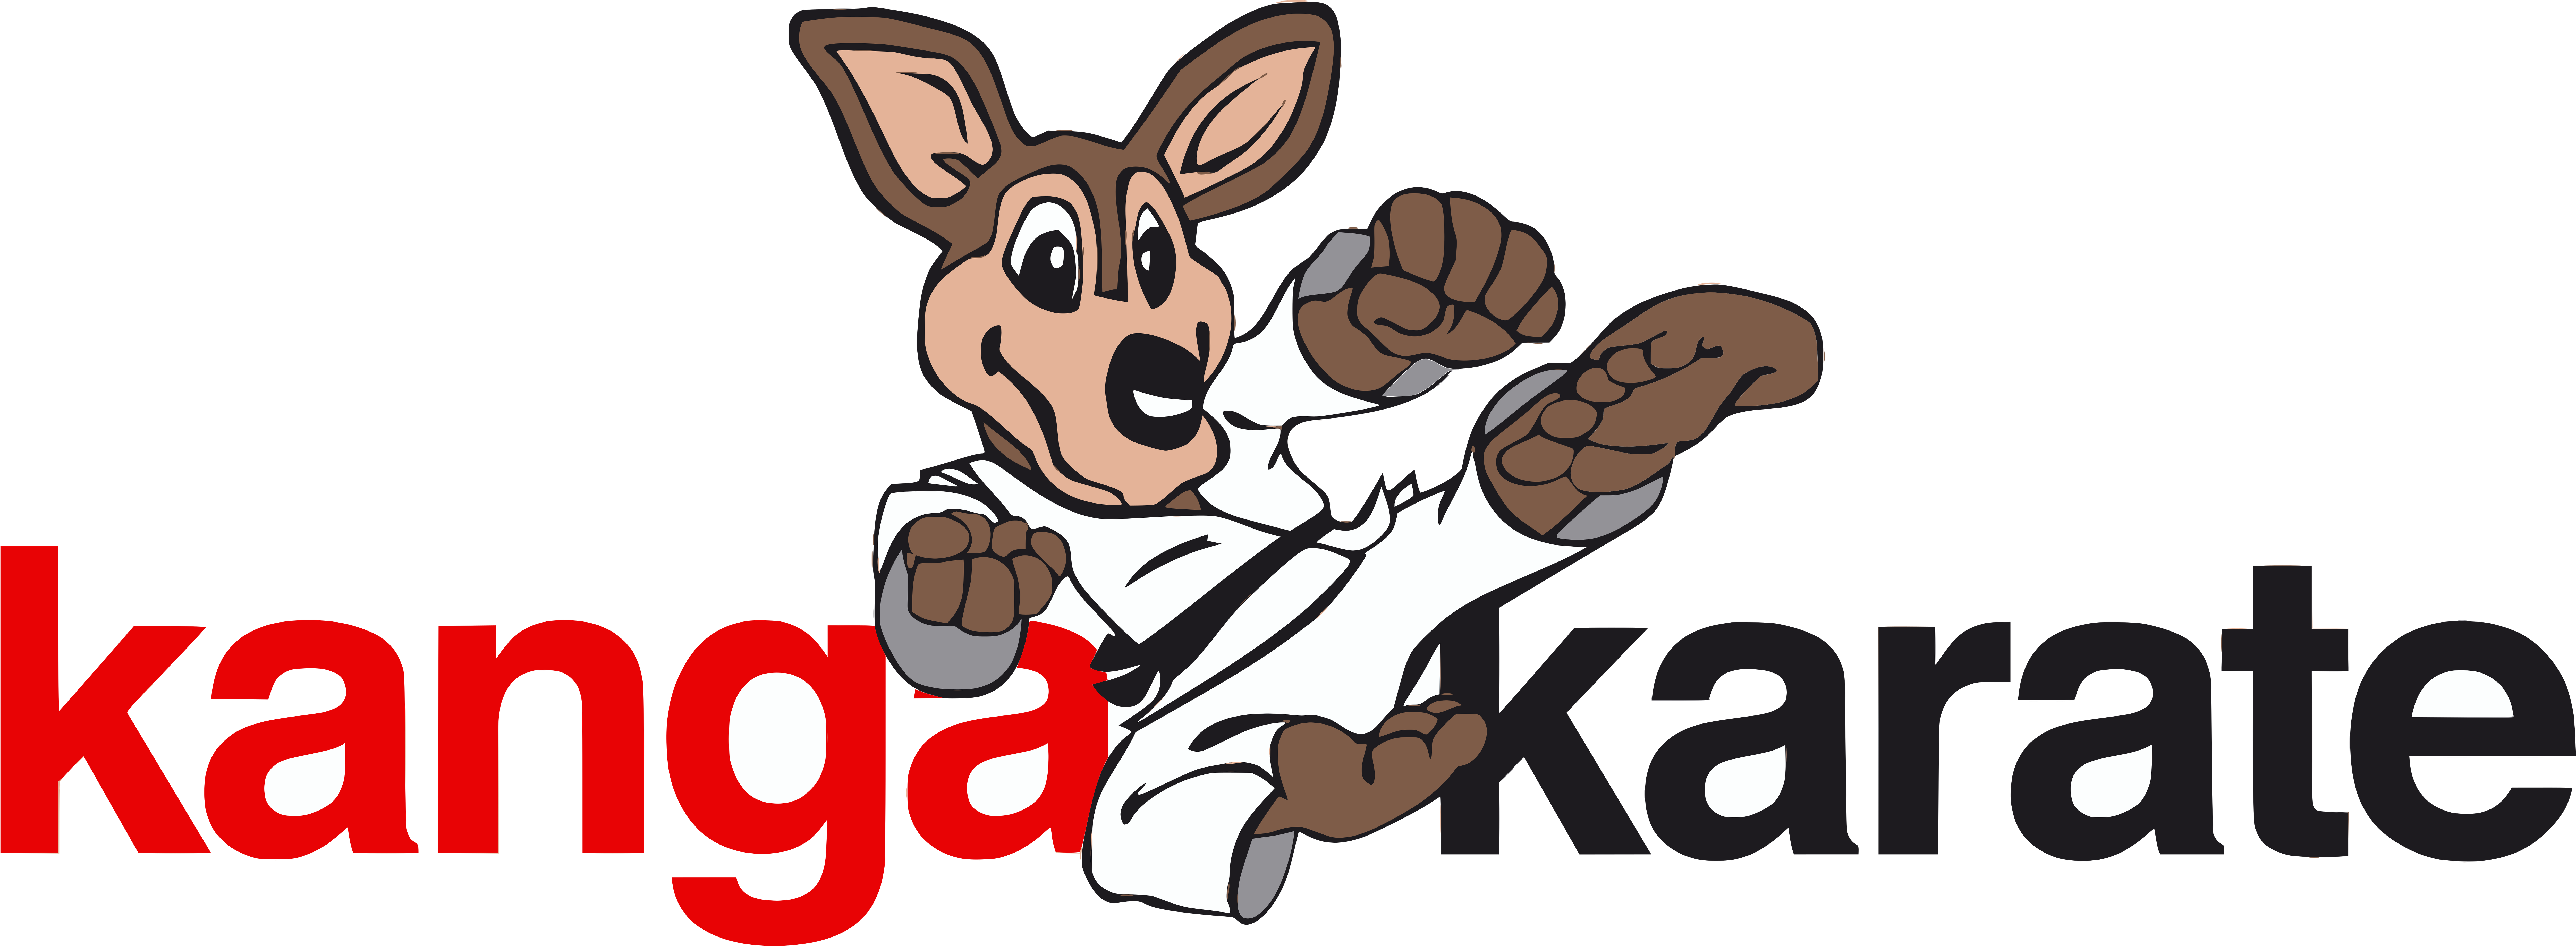 Kanga Karate kids